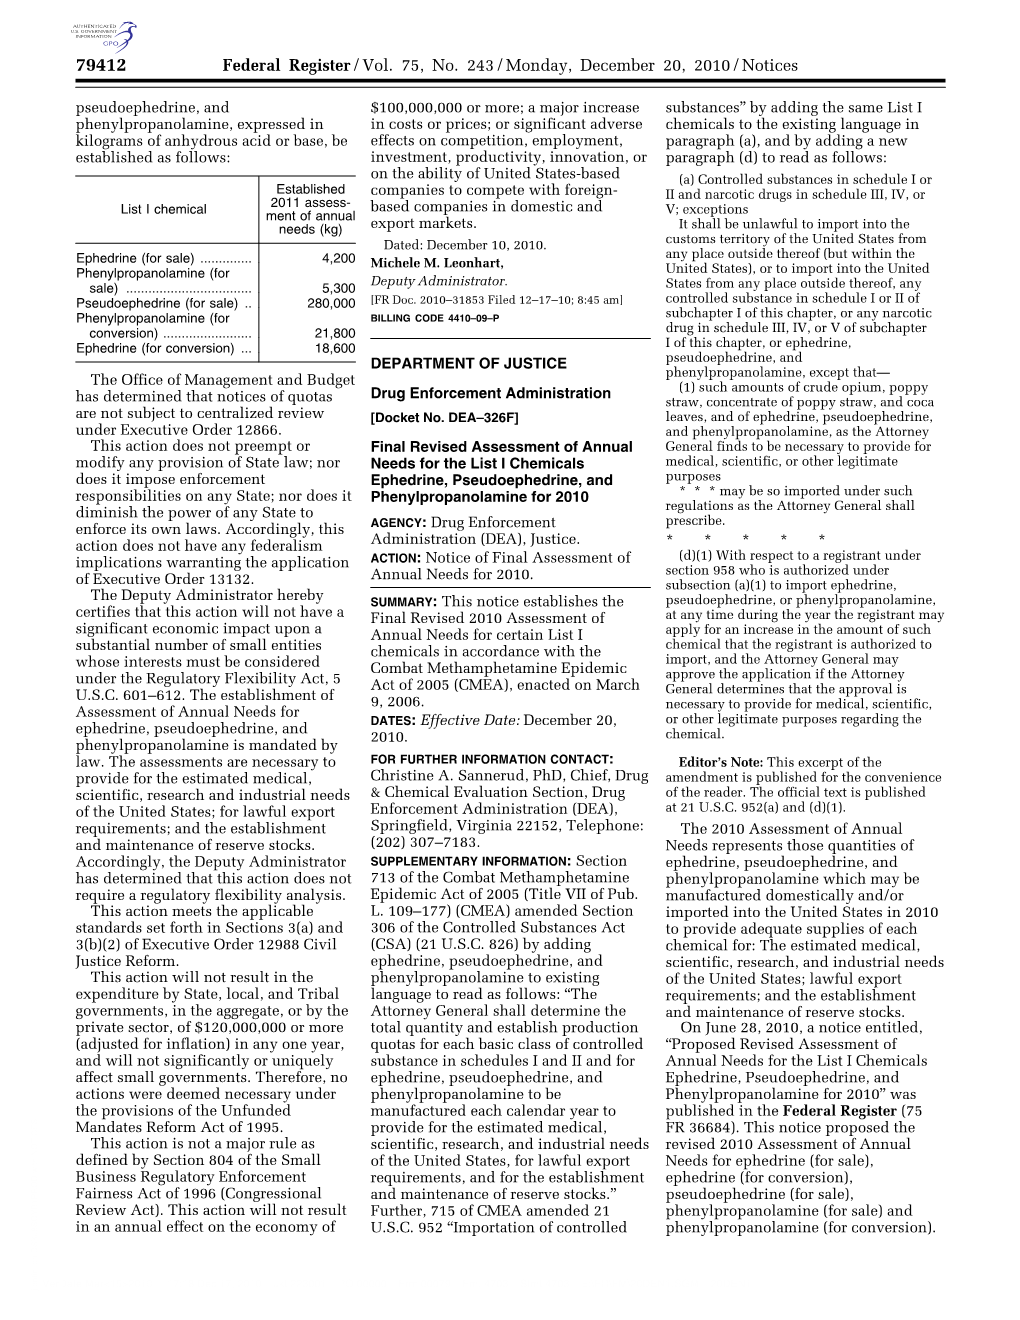 Federal Register/Vol. 75, No. 243/Monday, December 20, 2010